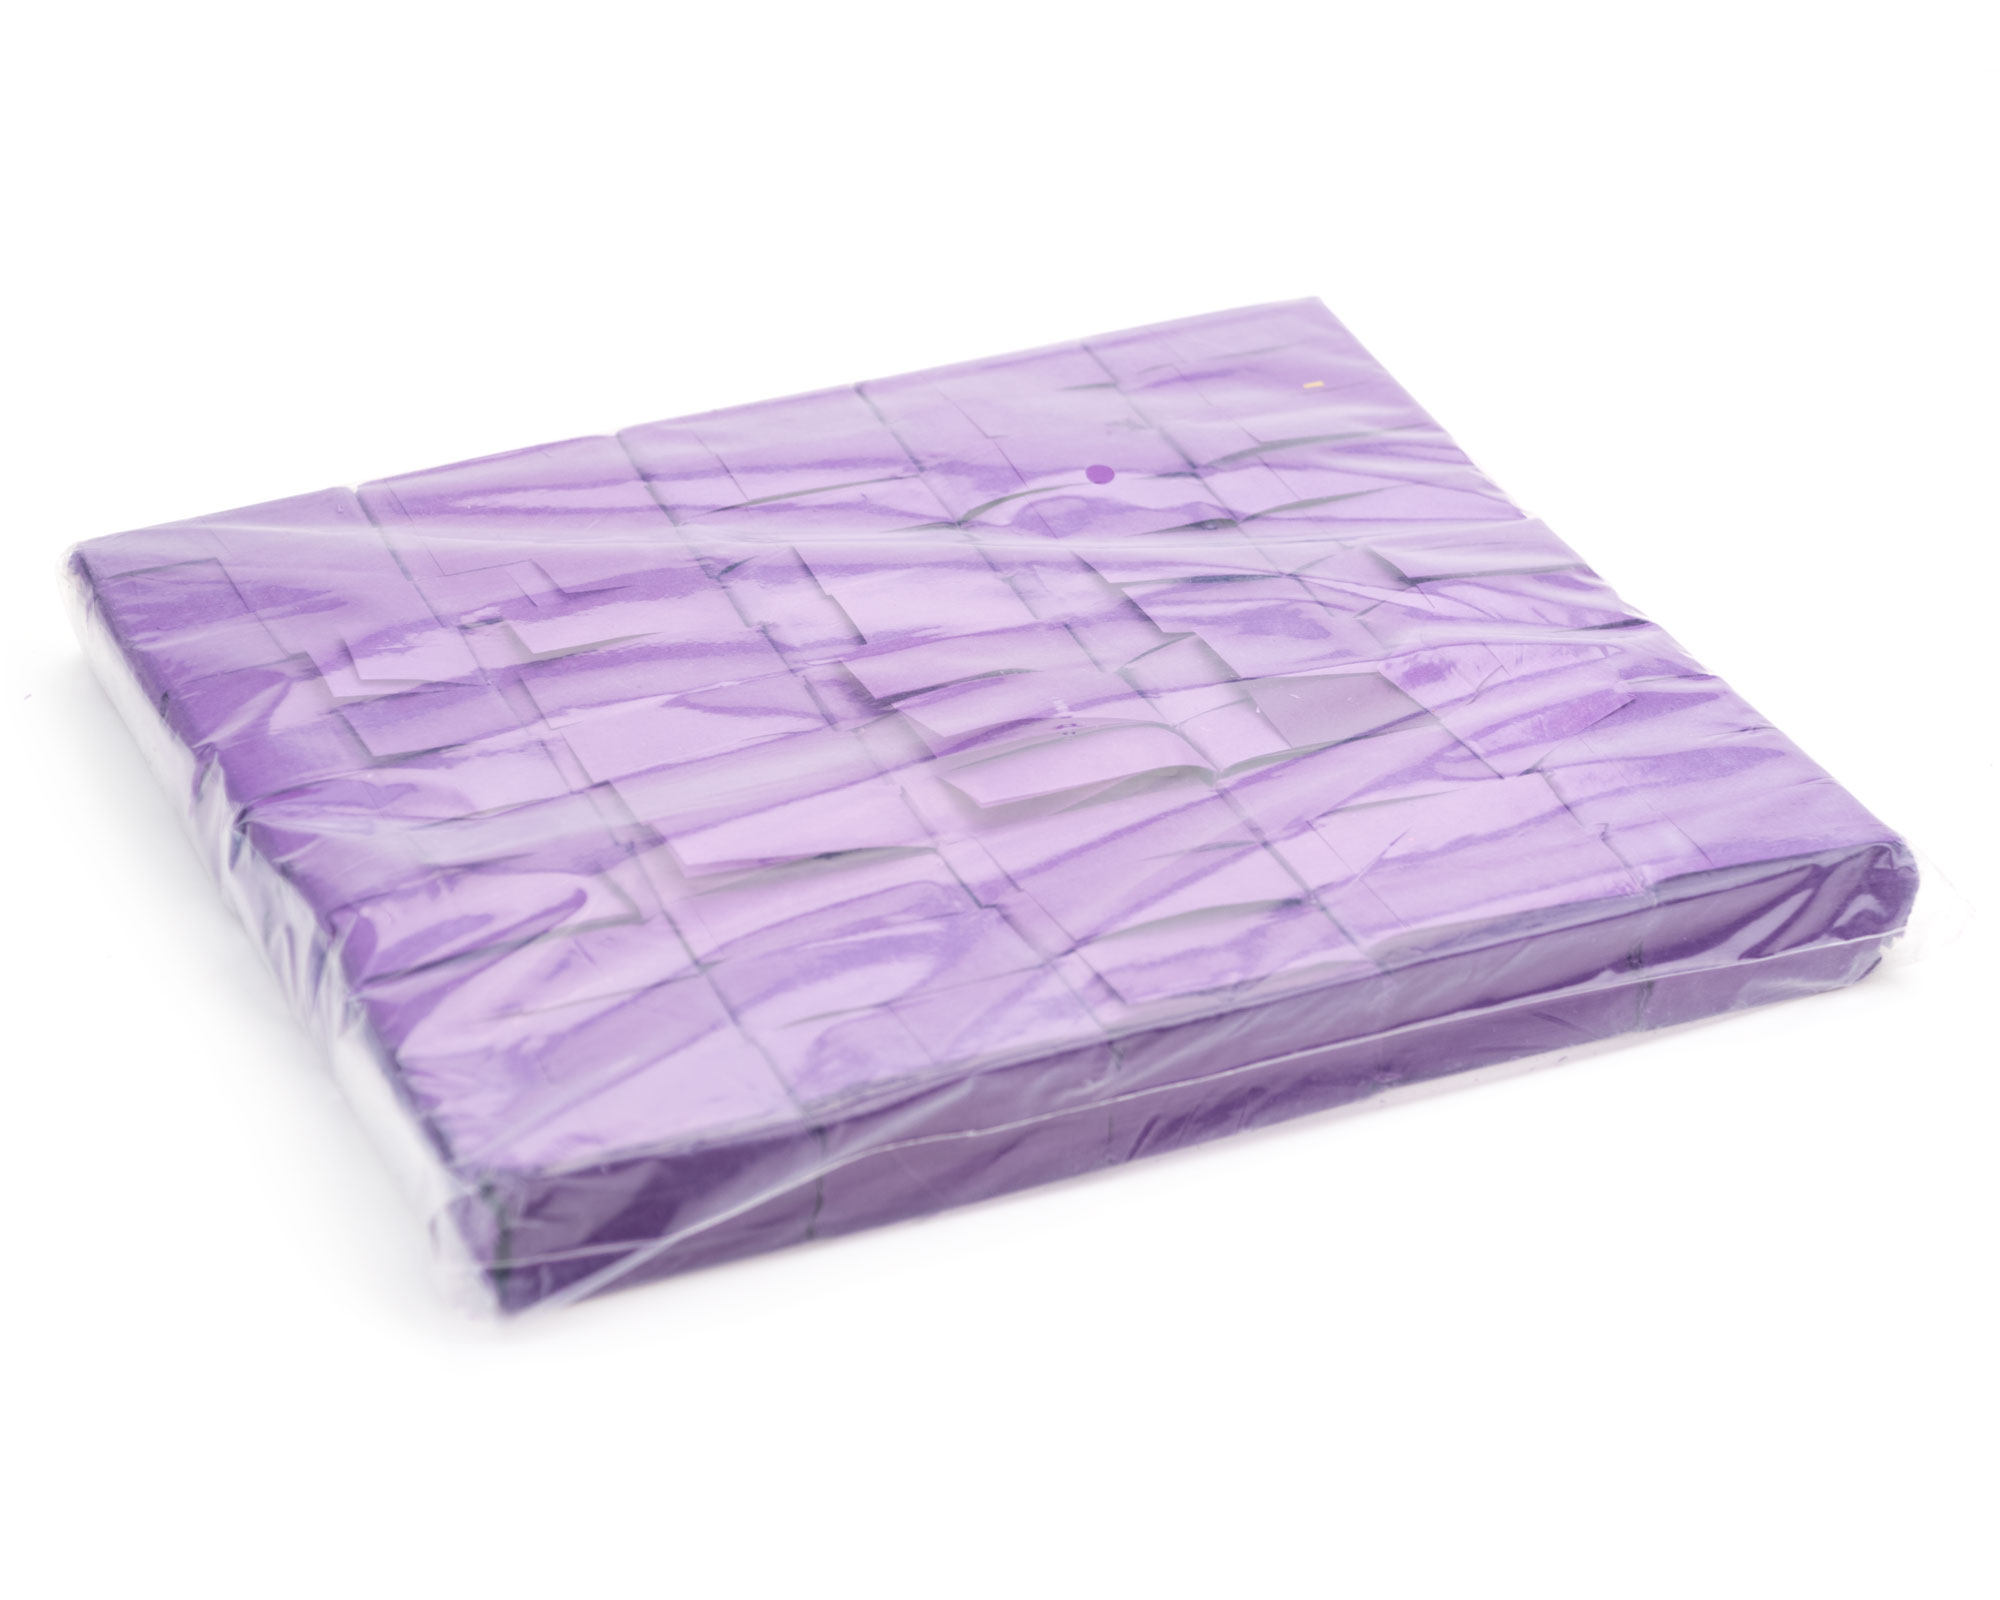 Purple Paper Confetti - 1 KG Bag: Superior Celebrations